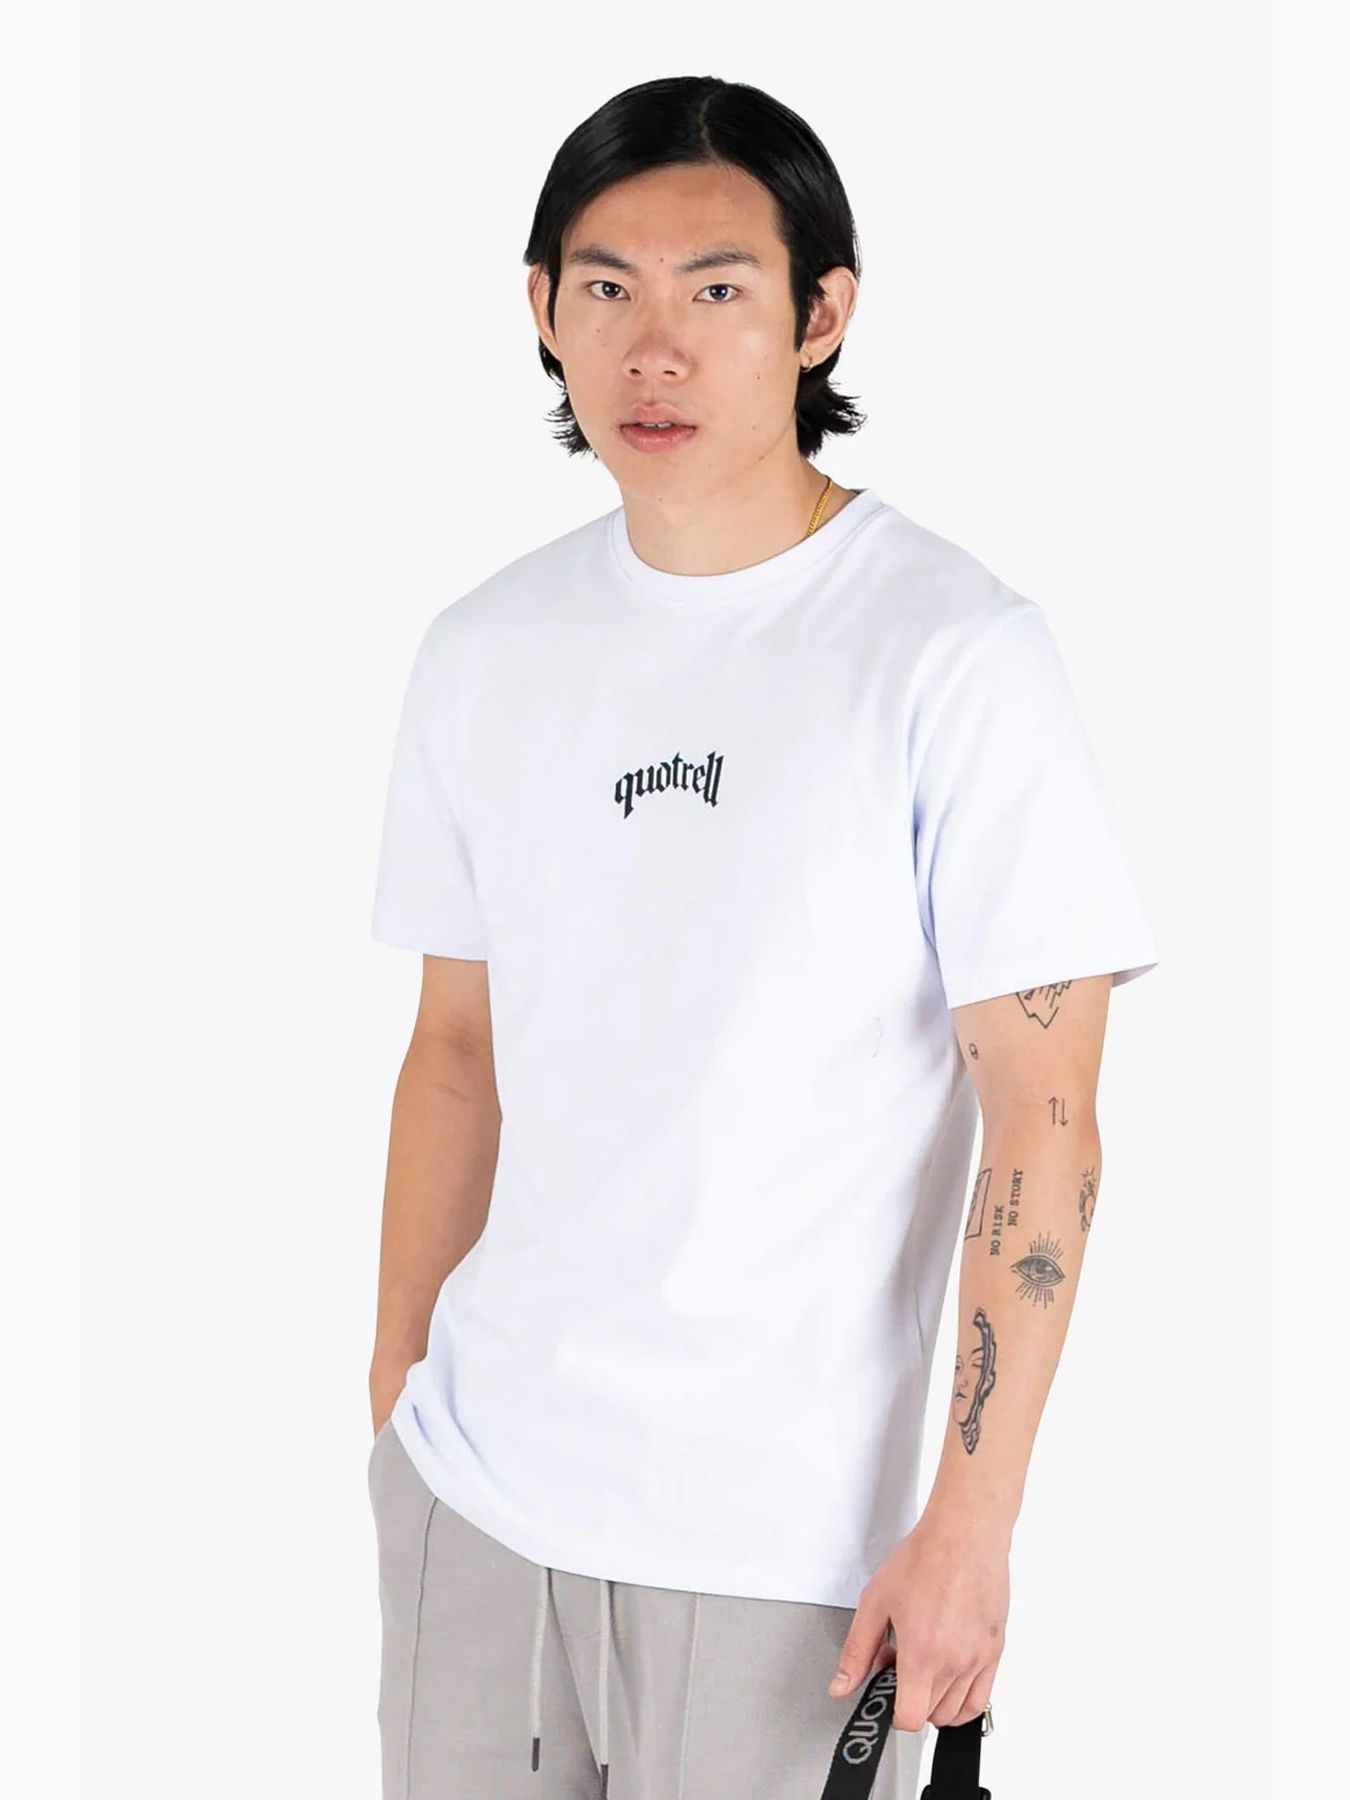 Quotrell Global unity t-shirt White/black 2900146973047